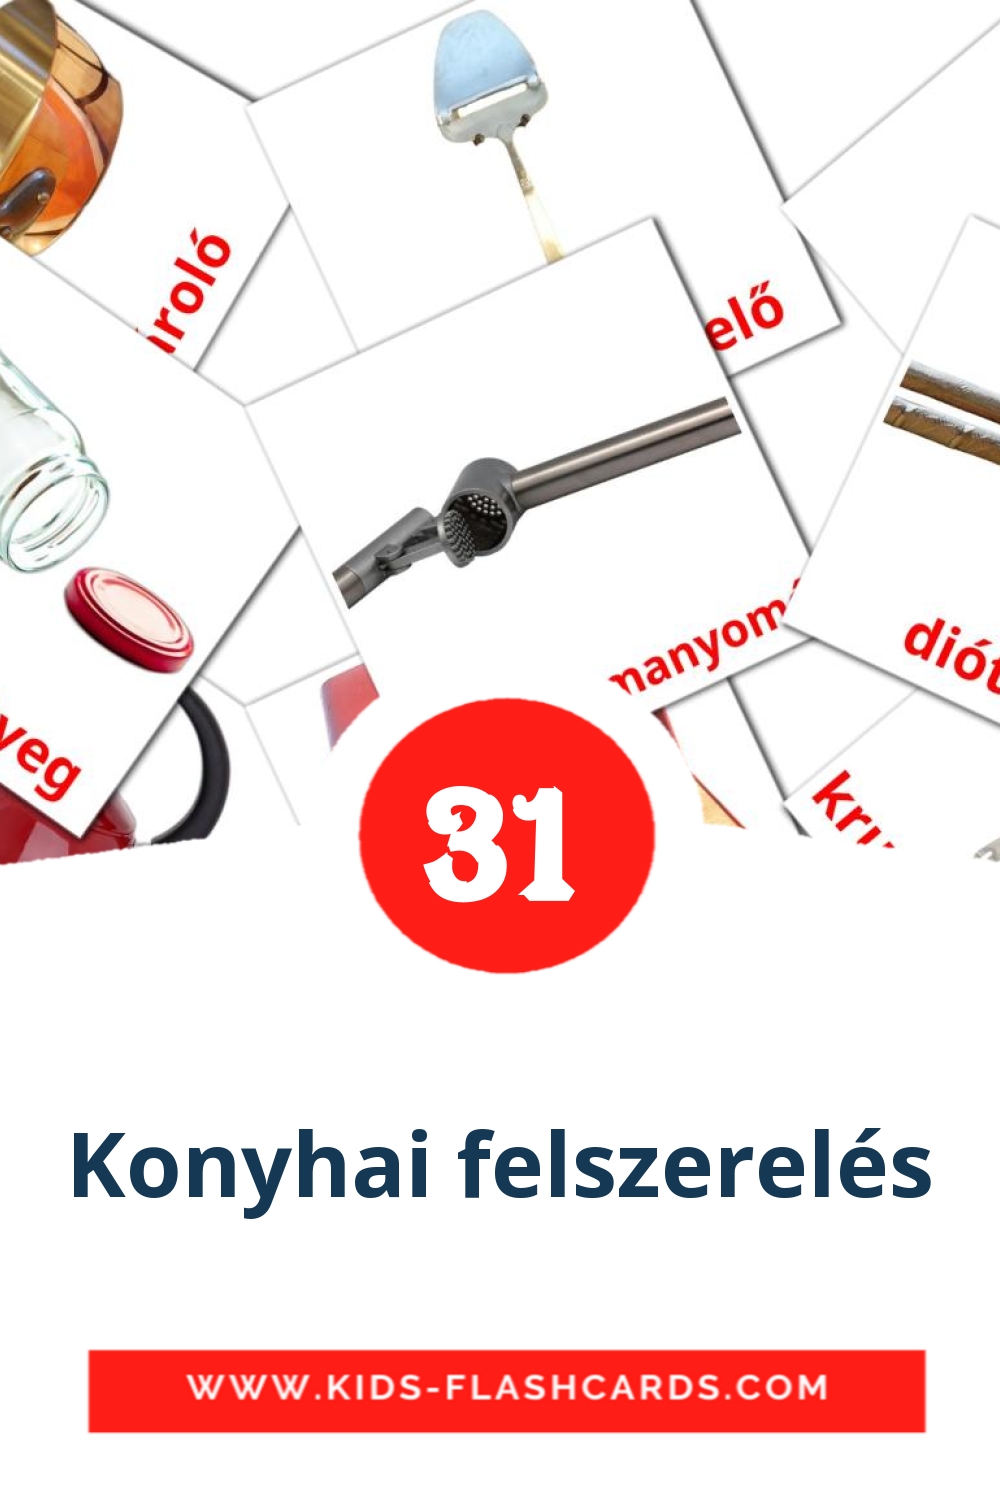 35 Konyhai felszerelés Picture Cards for Kindergarden in hungarian